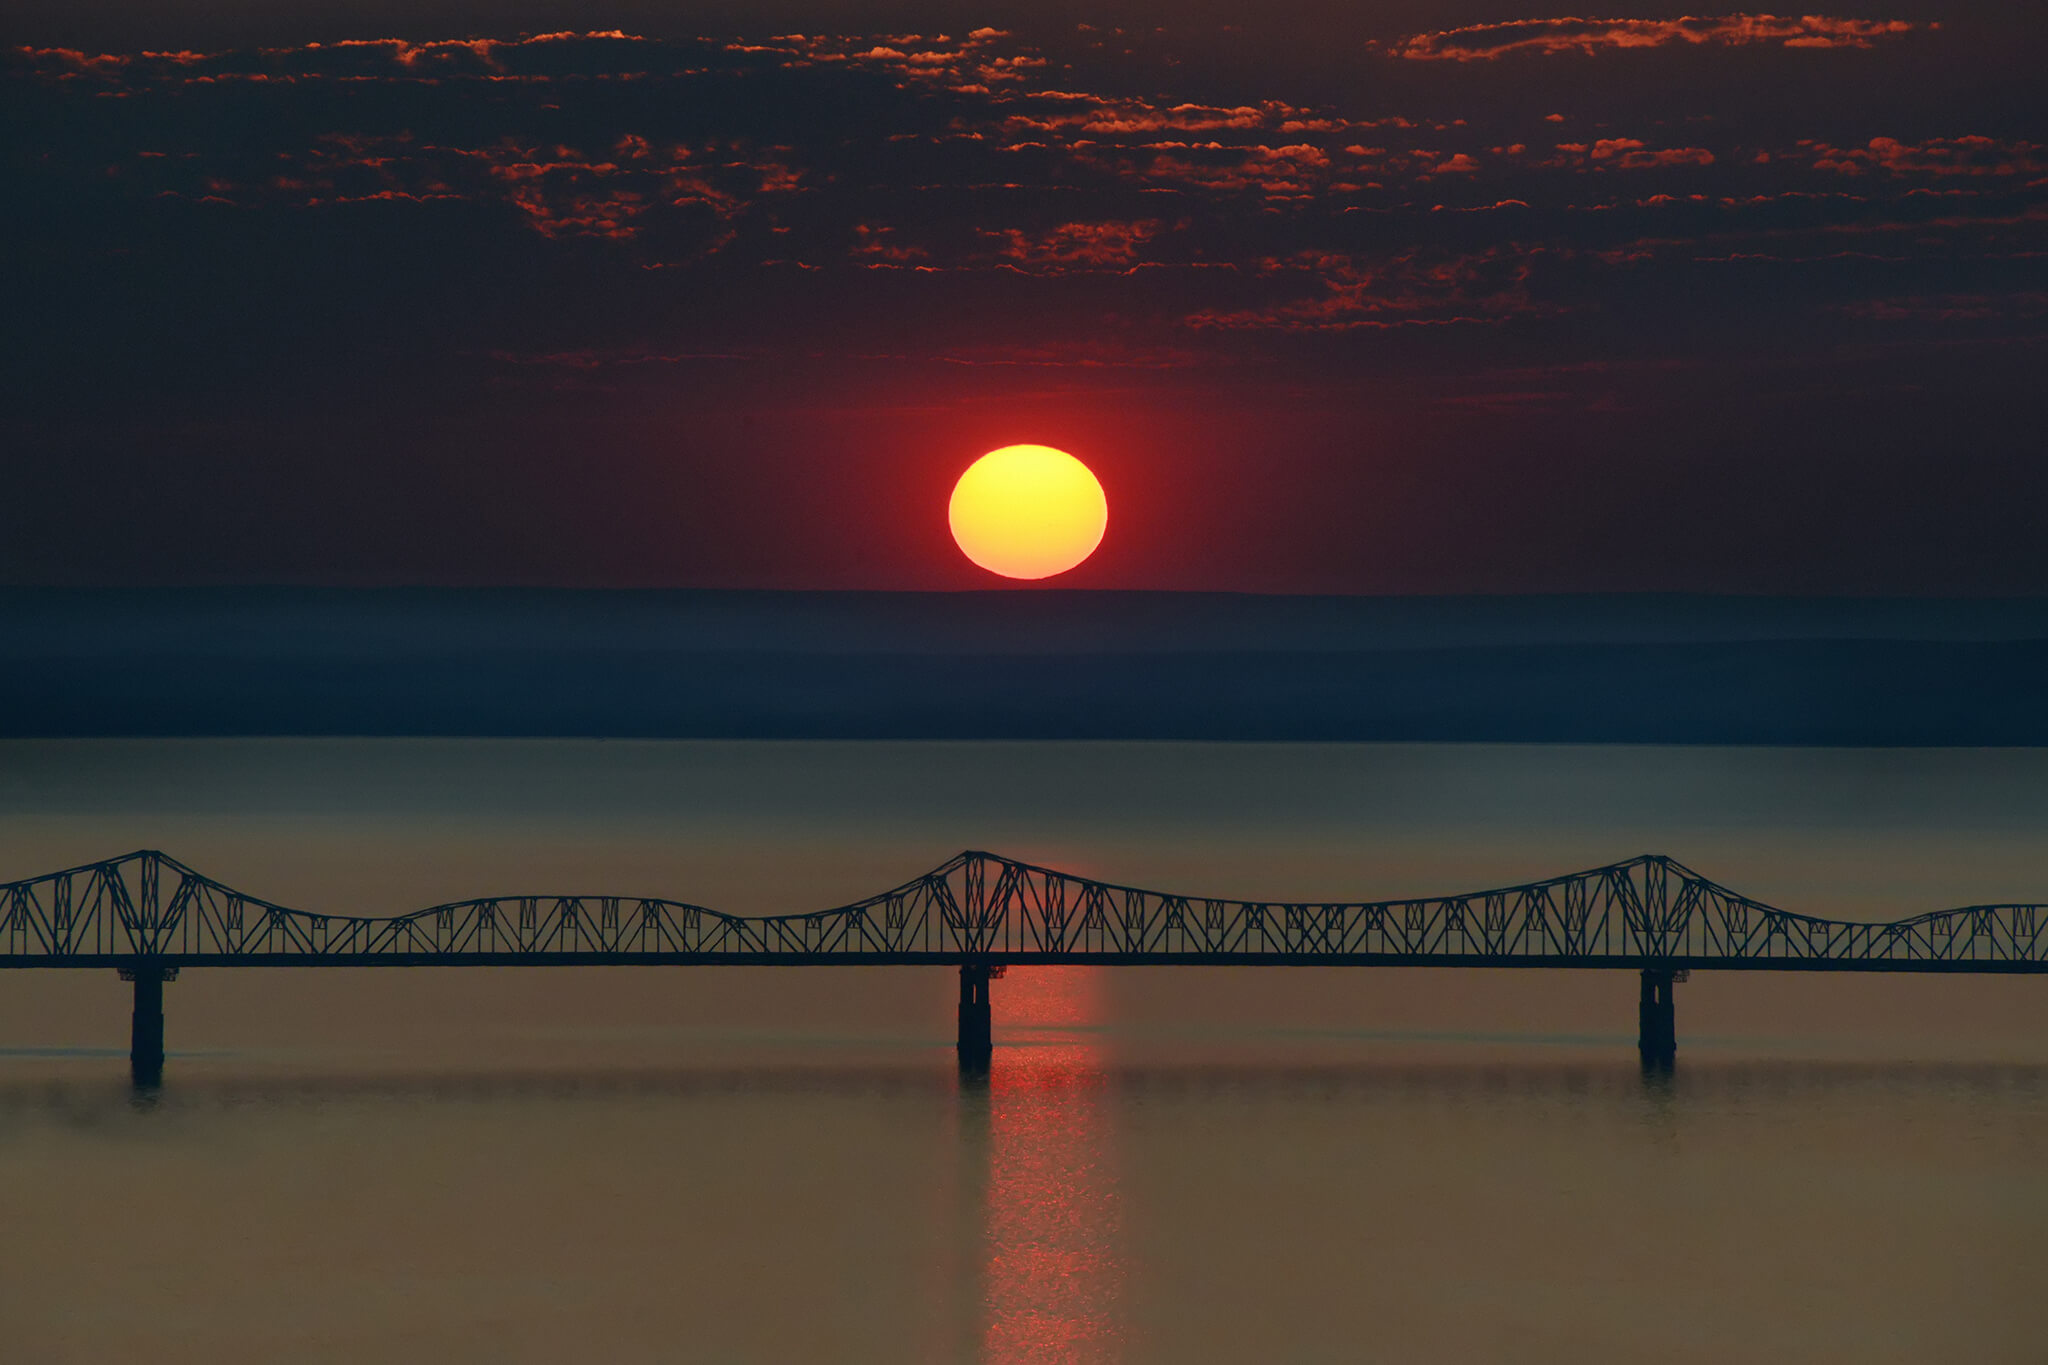 Sun sets over the bridge